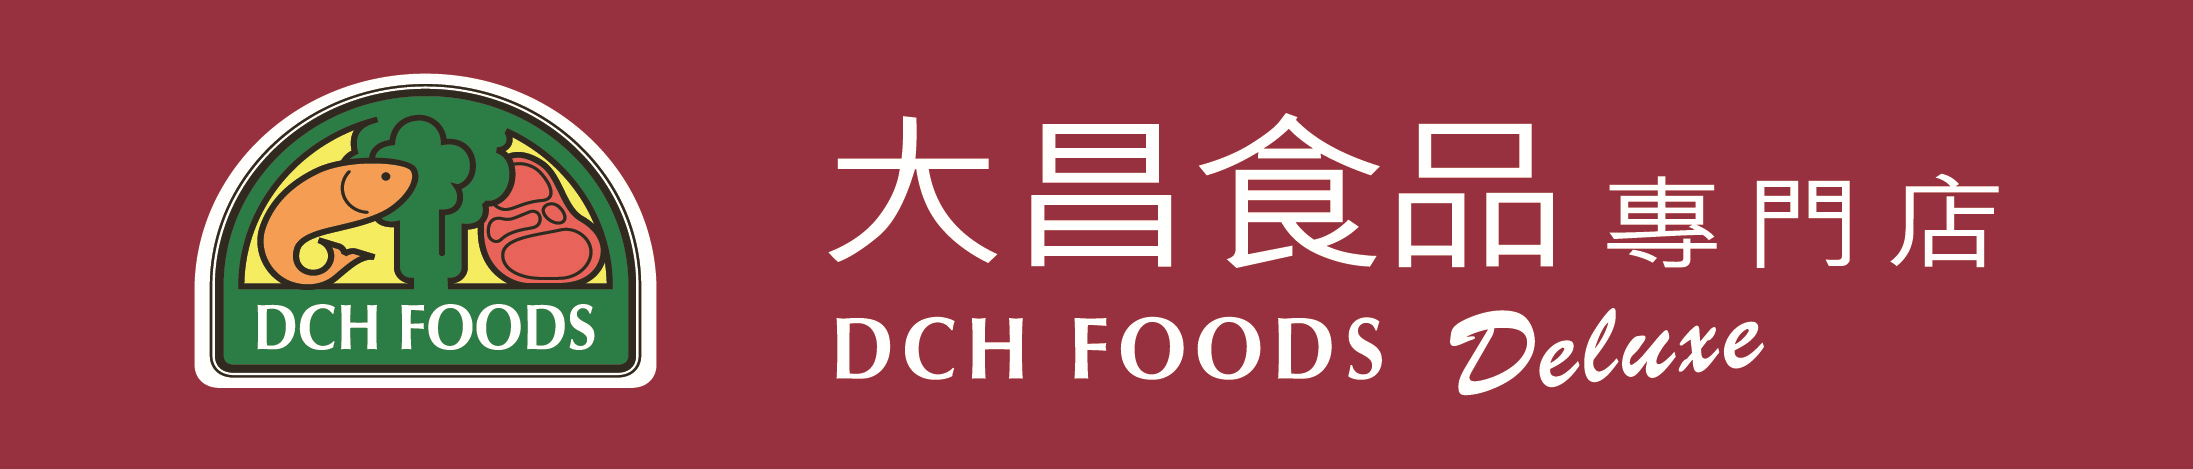 food scheme 2018 gold DCH FoodMart